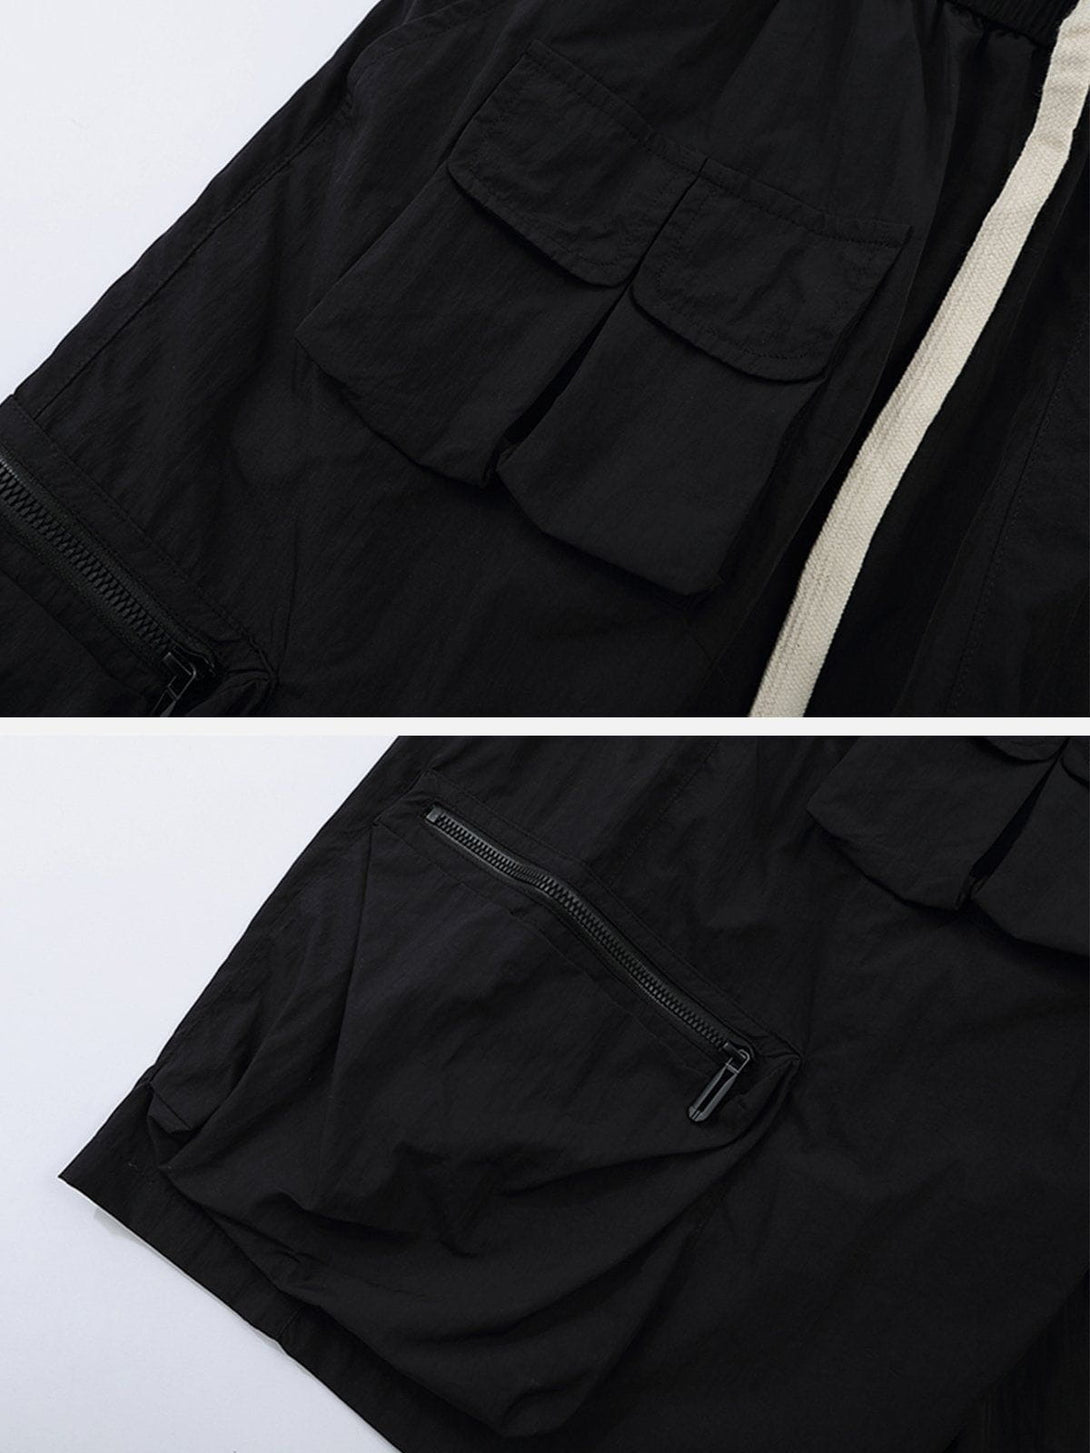 Majesda® - Multi-Pocket Drawstring Shorts outfit ideas streetwear fashion